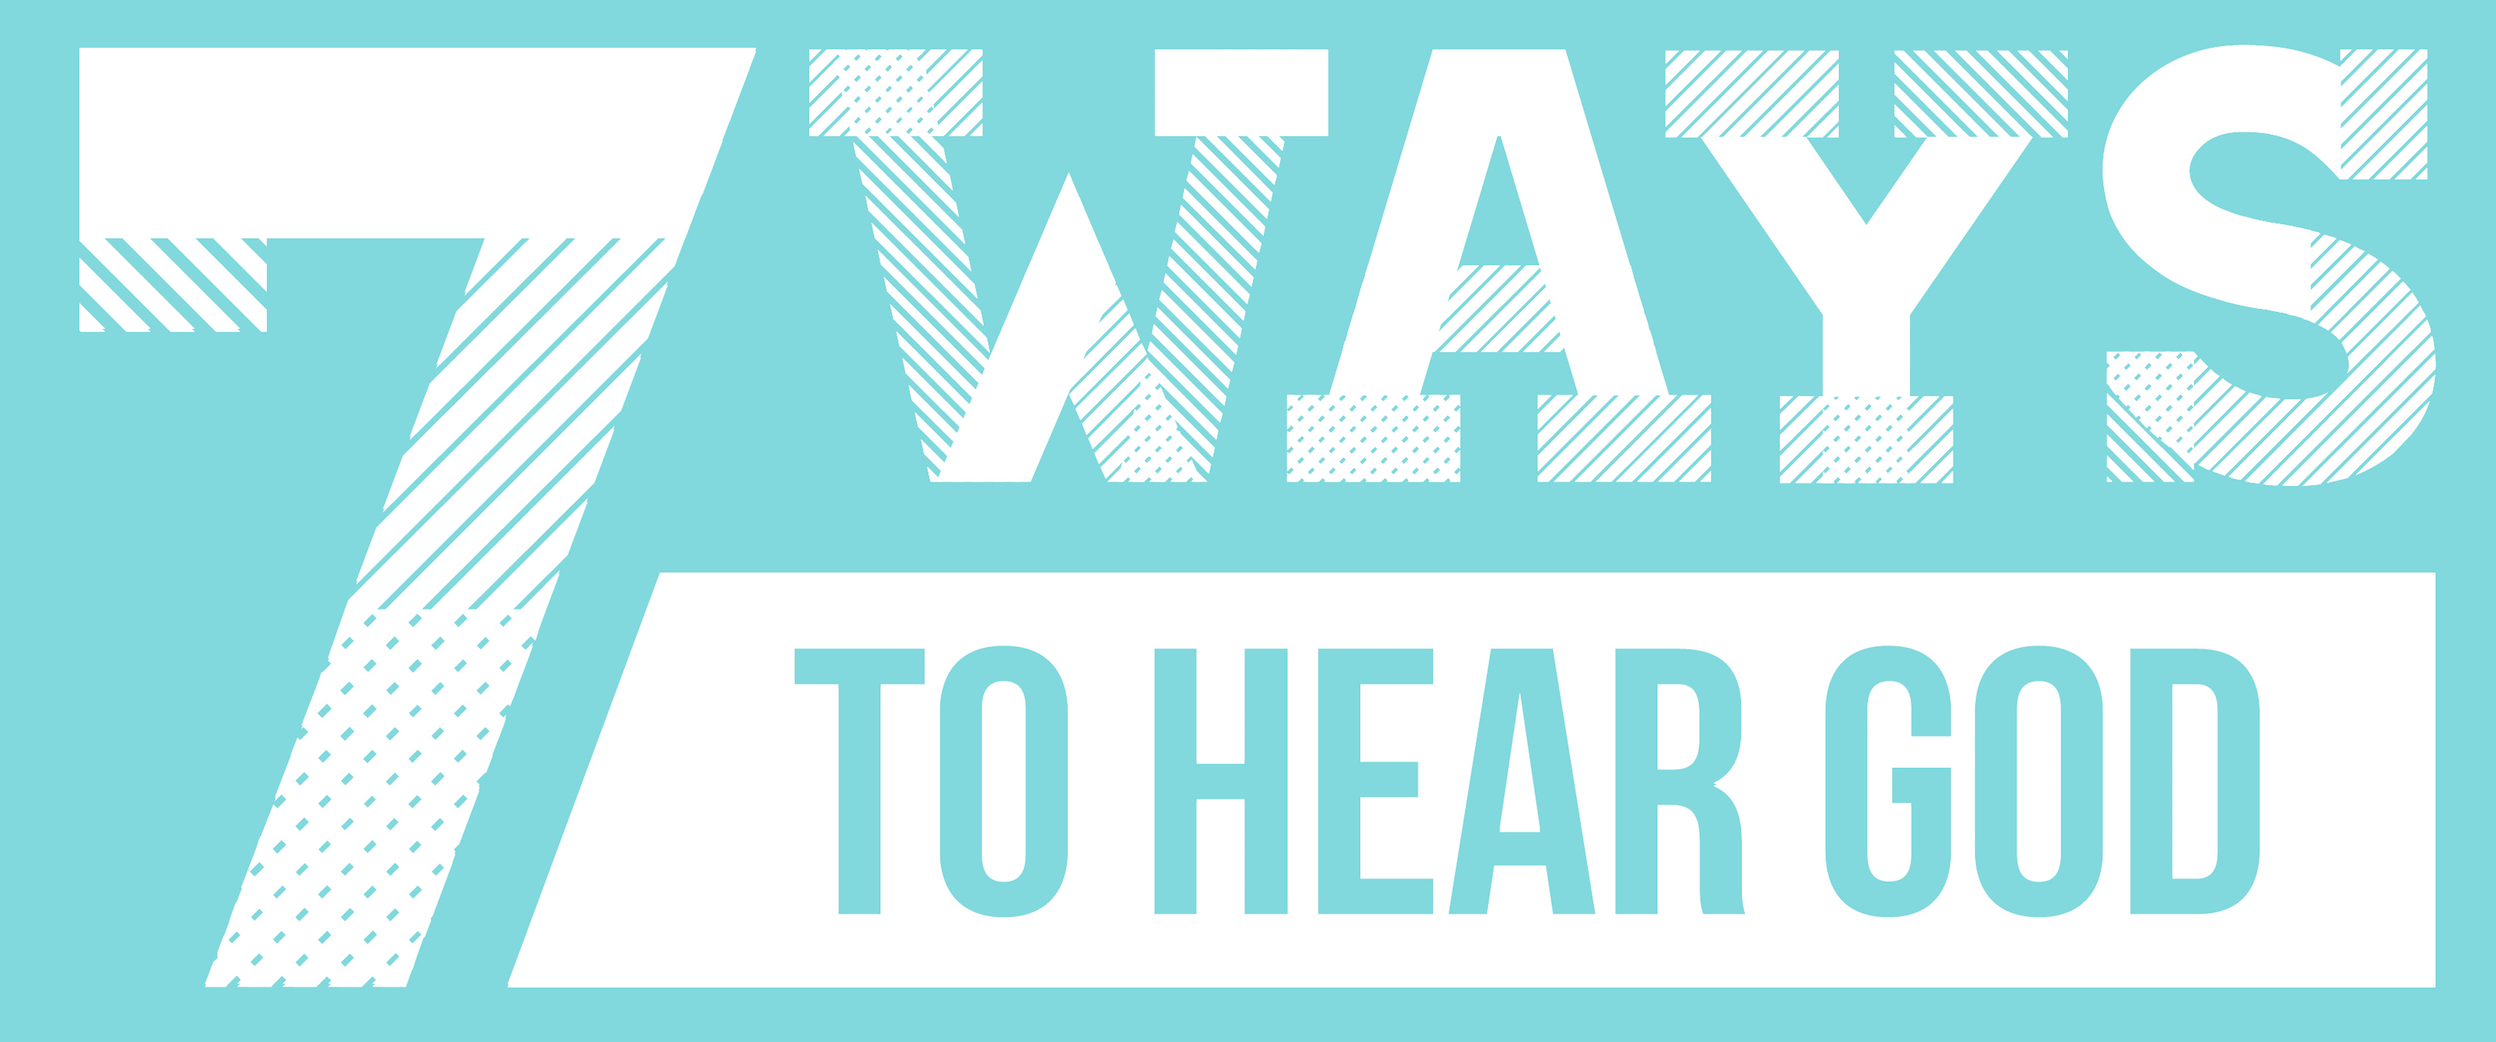 7 Ways to Hear God | Dreams 